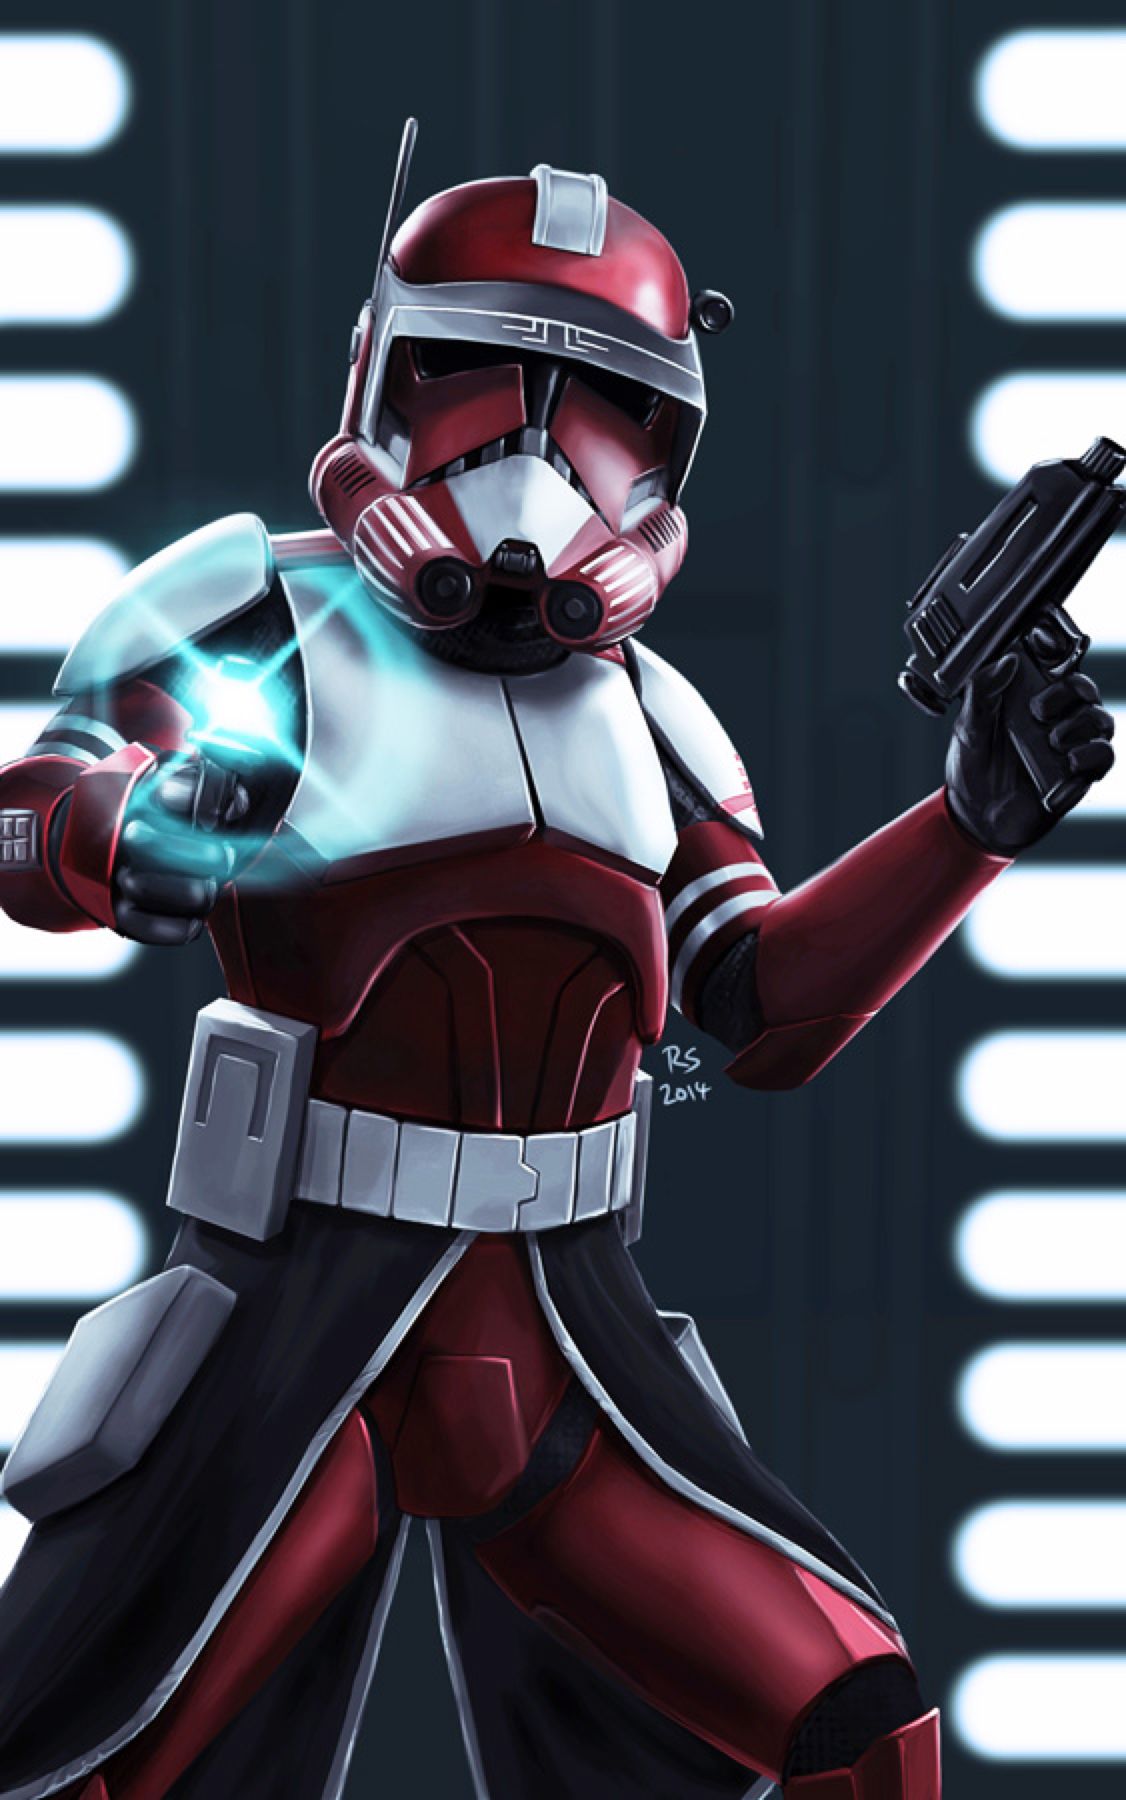 Clone Commander Fox. Star wars picture, Star wars clone wars, Star wars image